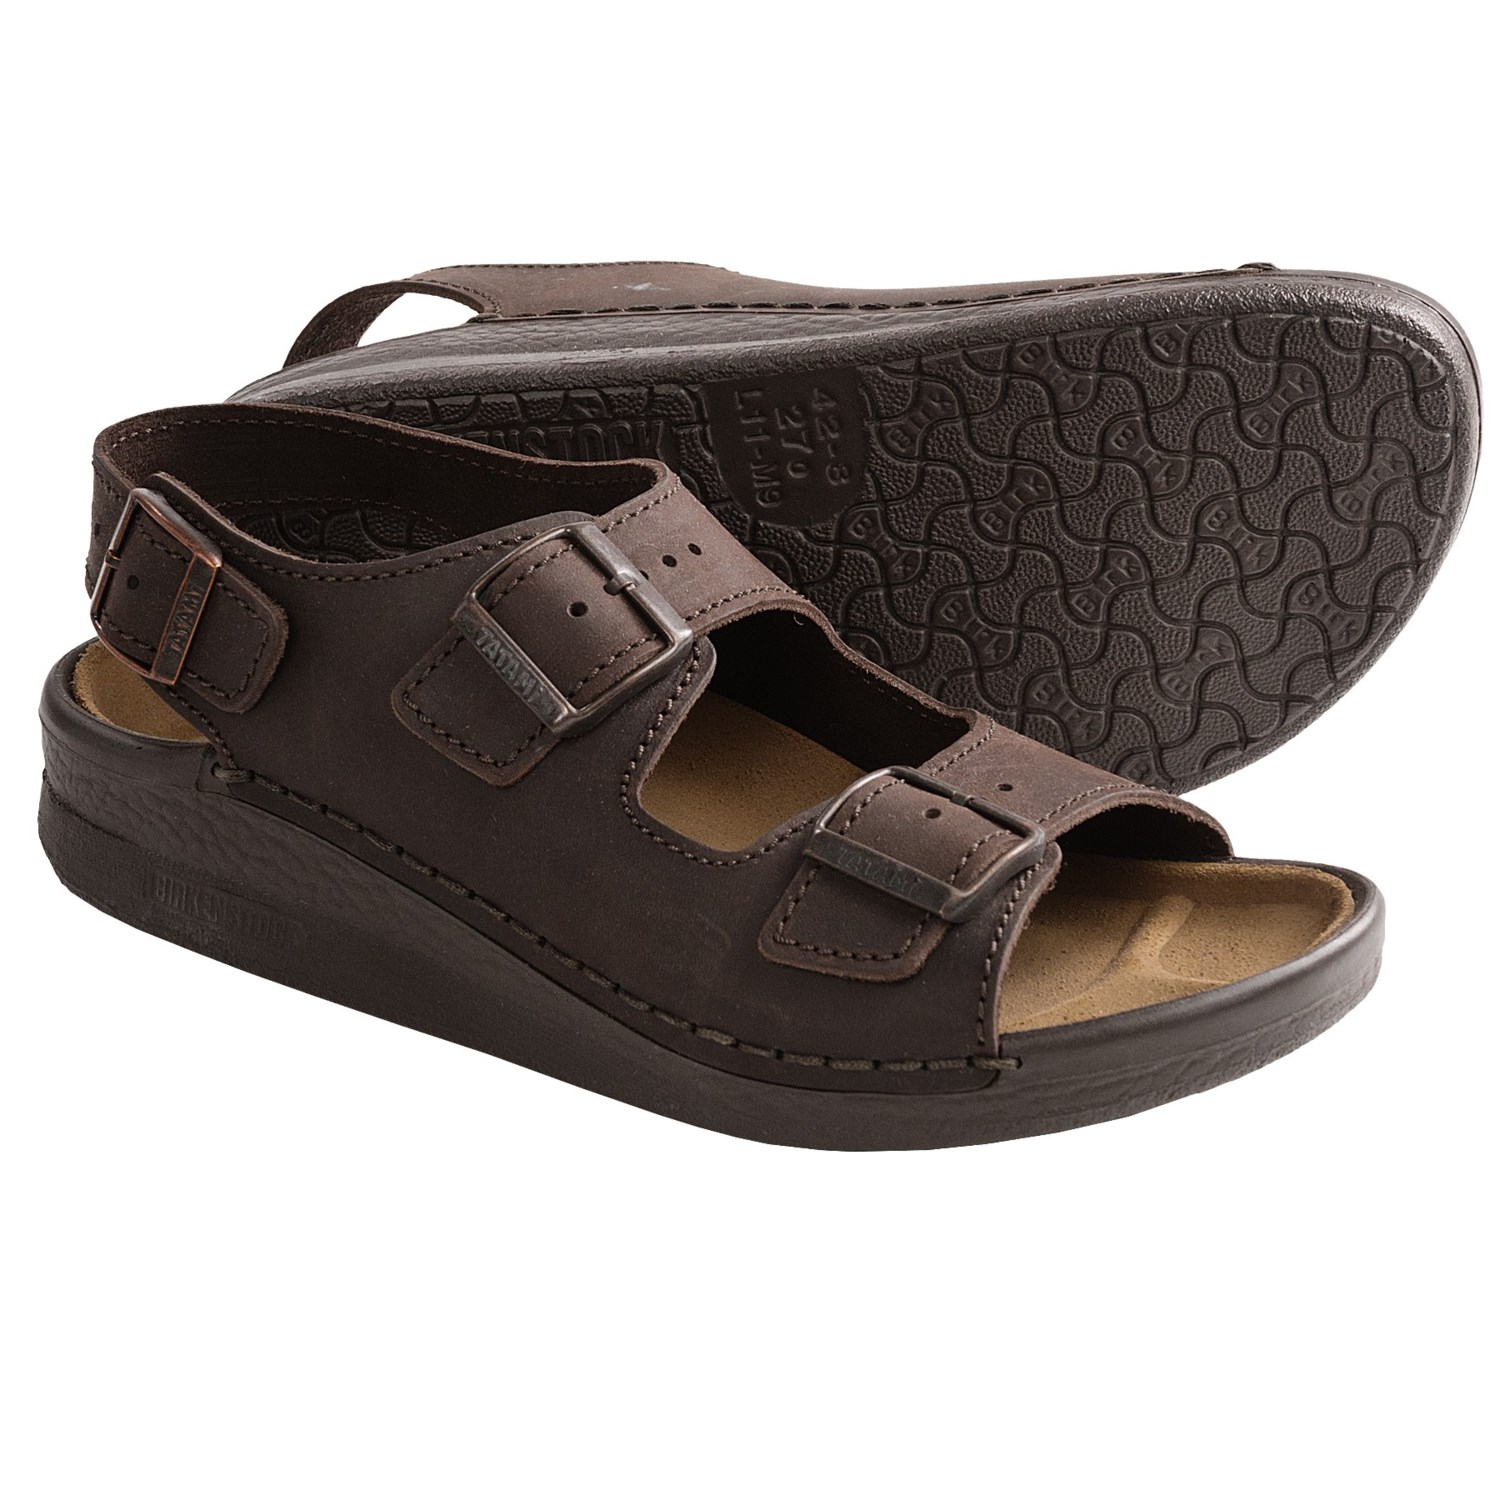 Tatami by Birkenstock Nebraska Sandals - Oiled Leather (For Men and ...